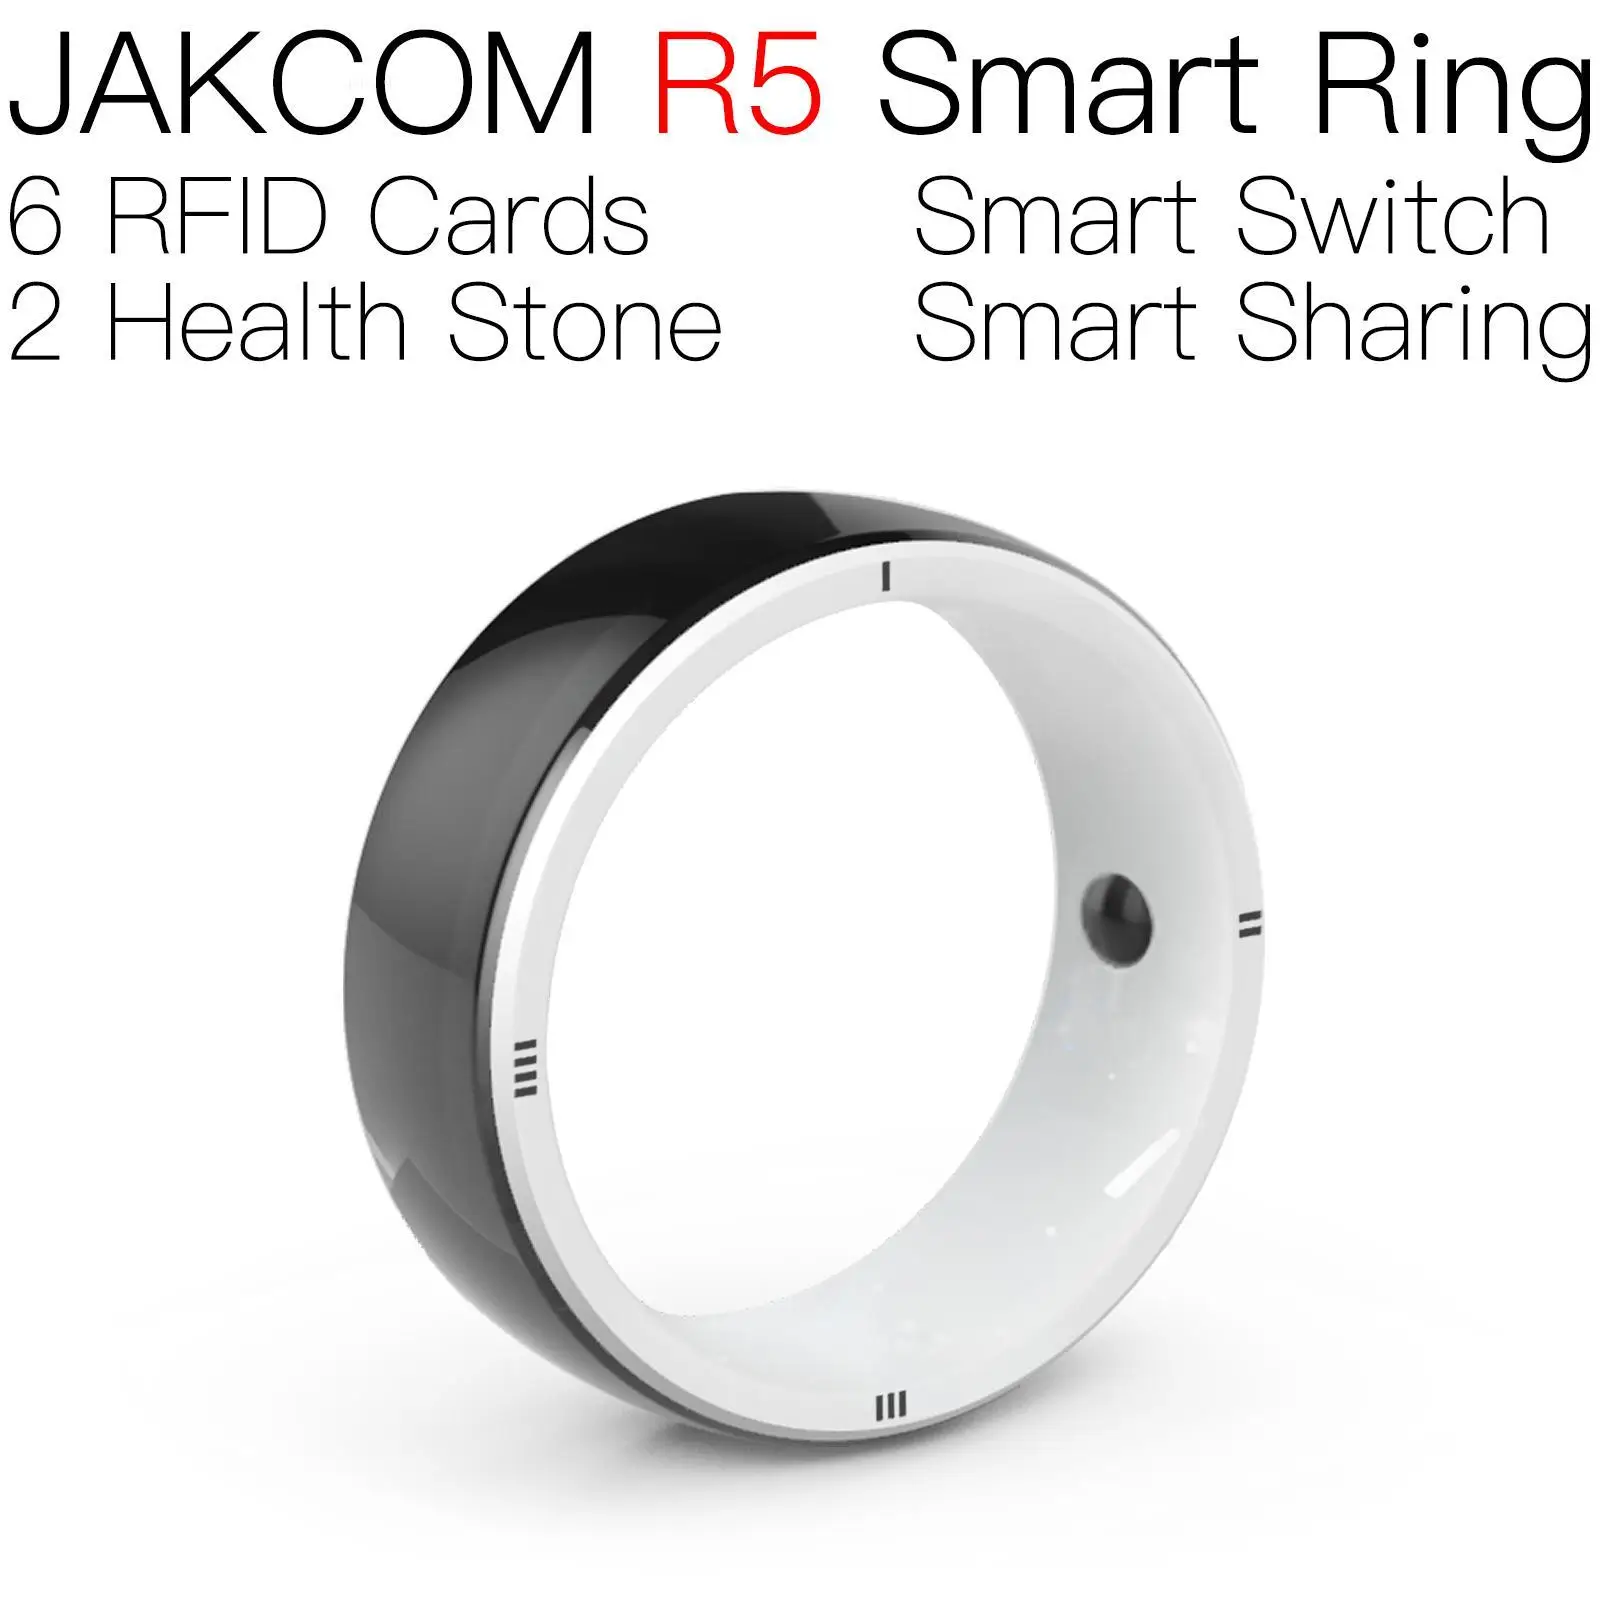 

JAKCOM R5 Smart Ring Nice than new users bonus projector nail clipper smart watch series 6 bracelets gadget blood